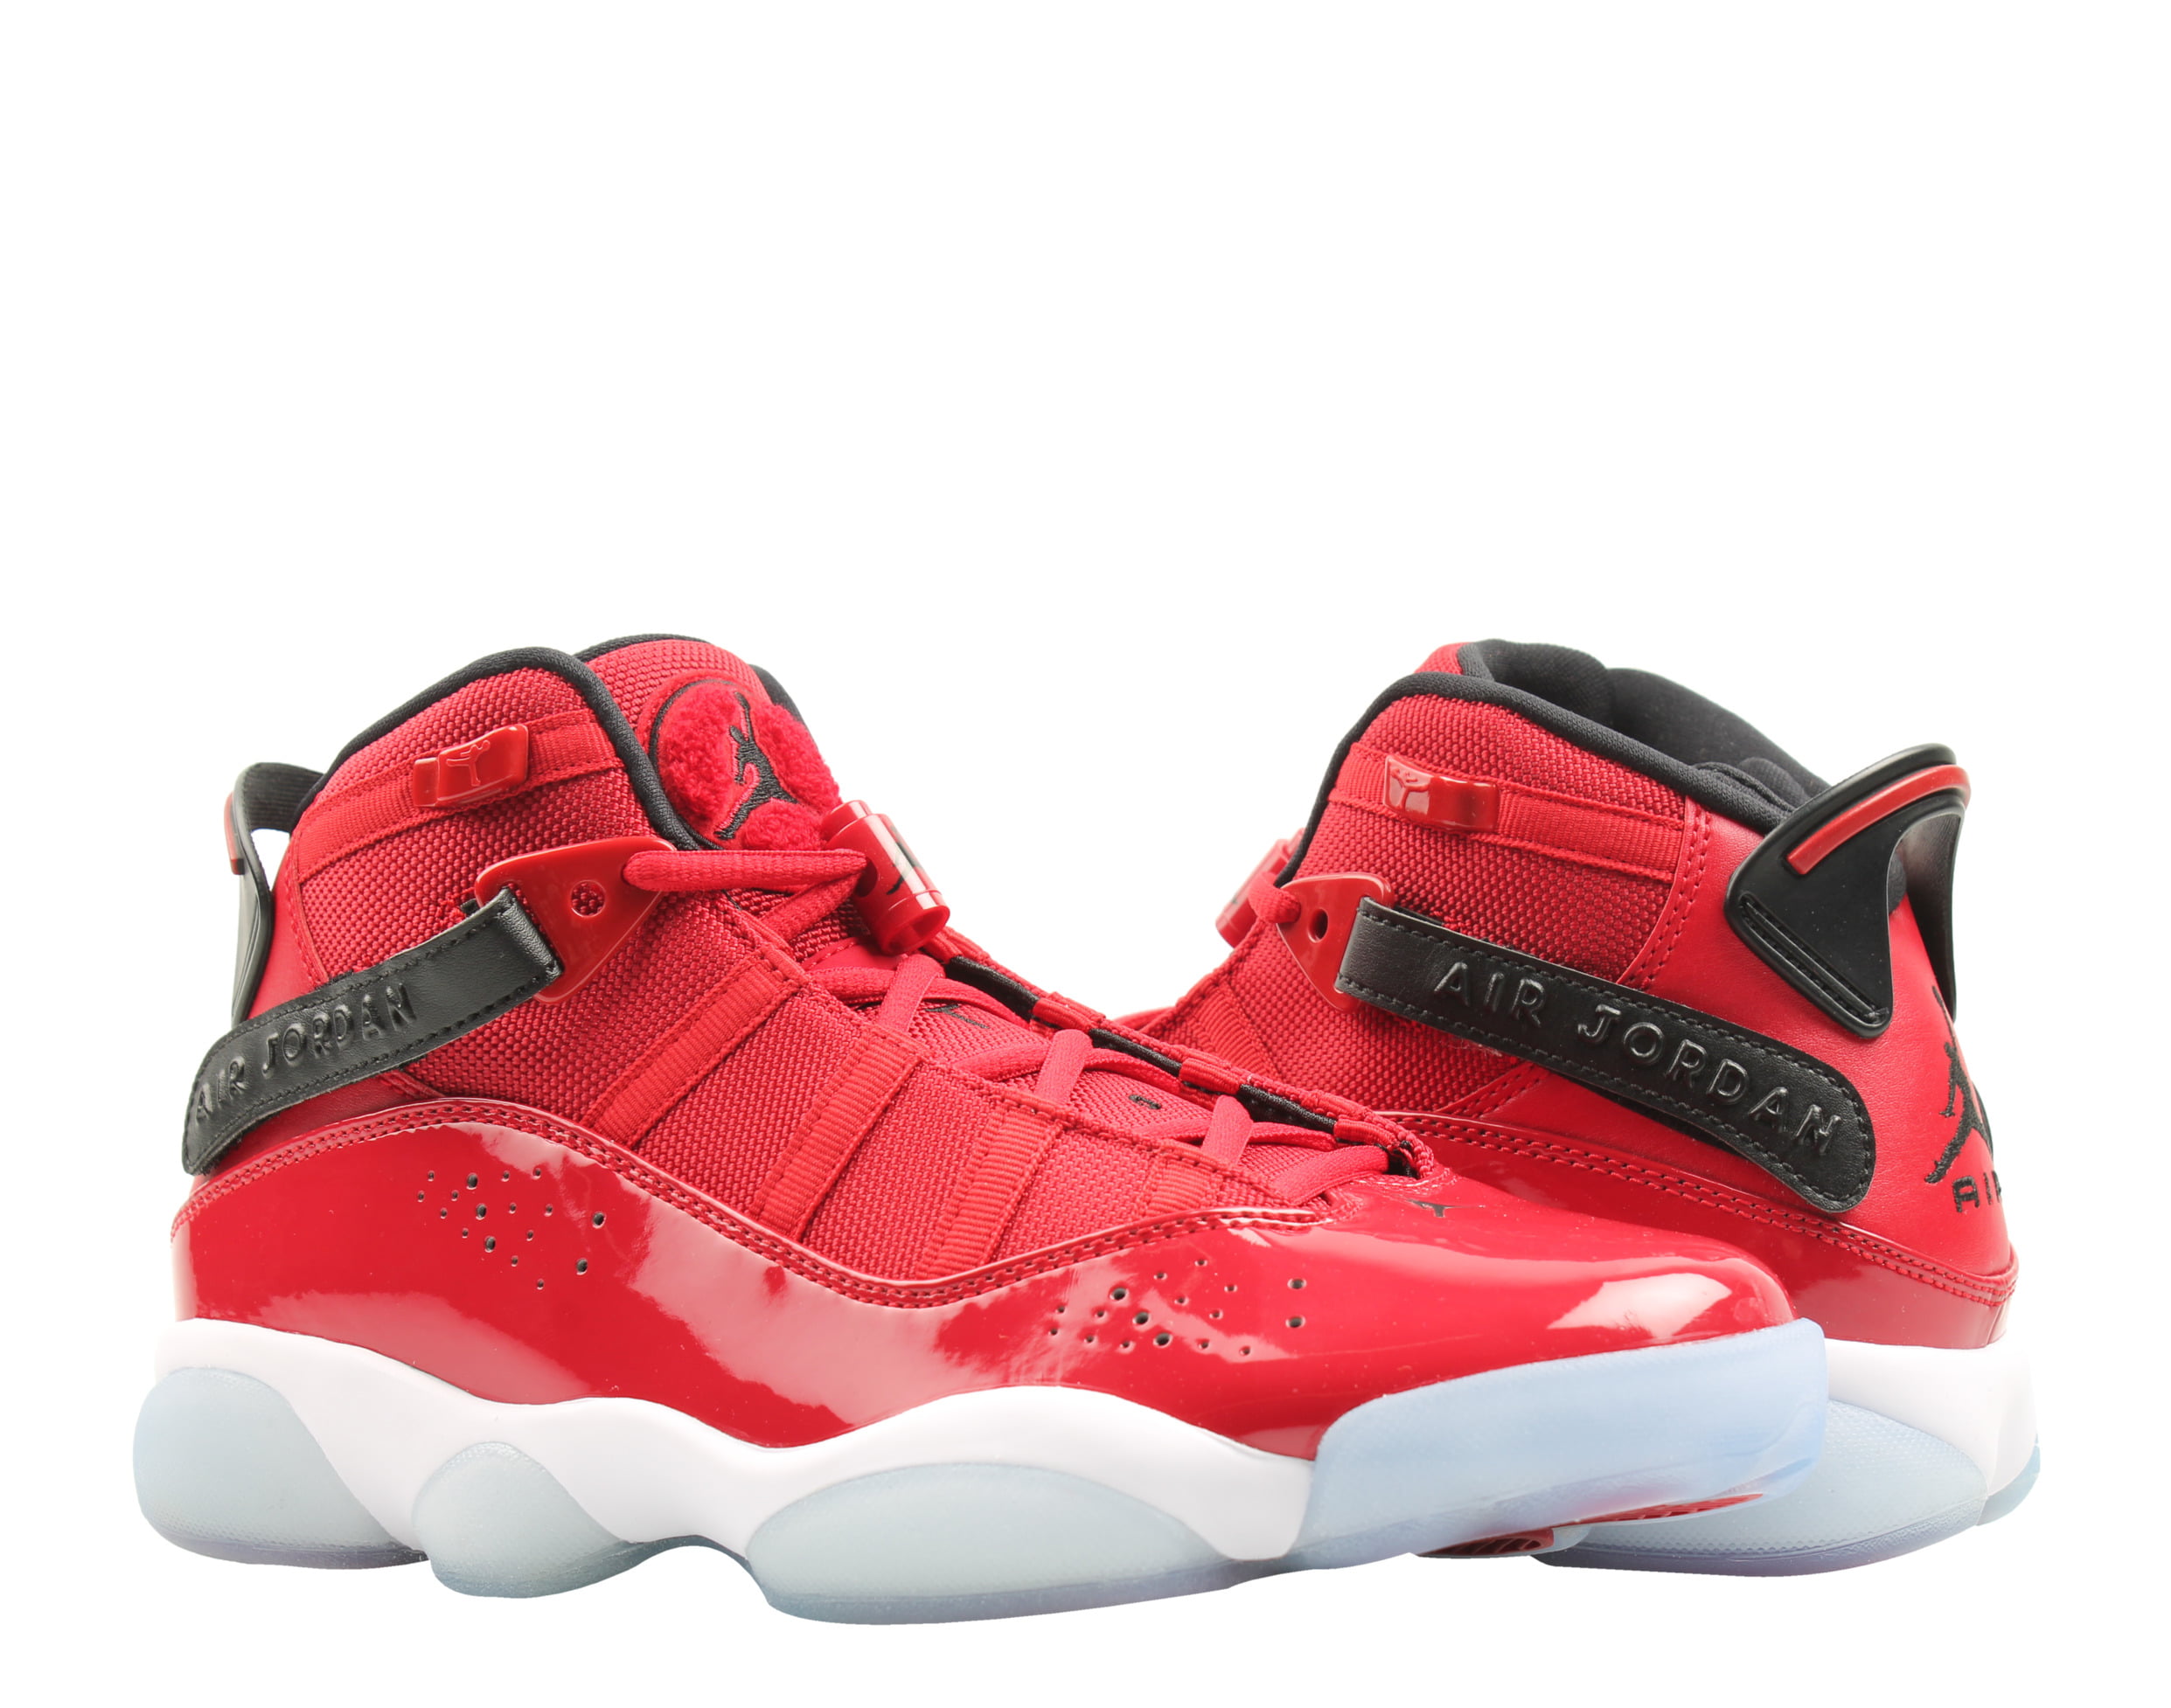 Jordan - Nike Air Jordan 6 Rings Gym Red/Black-White Men's Basketball